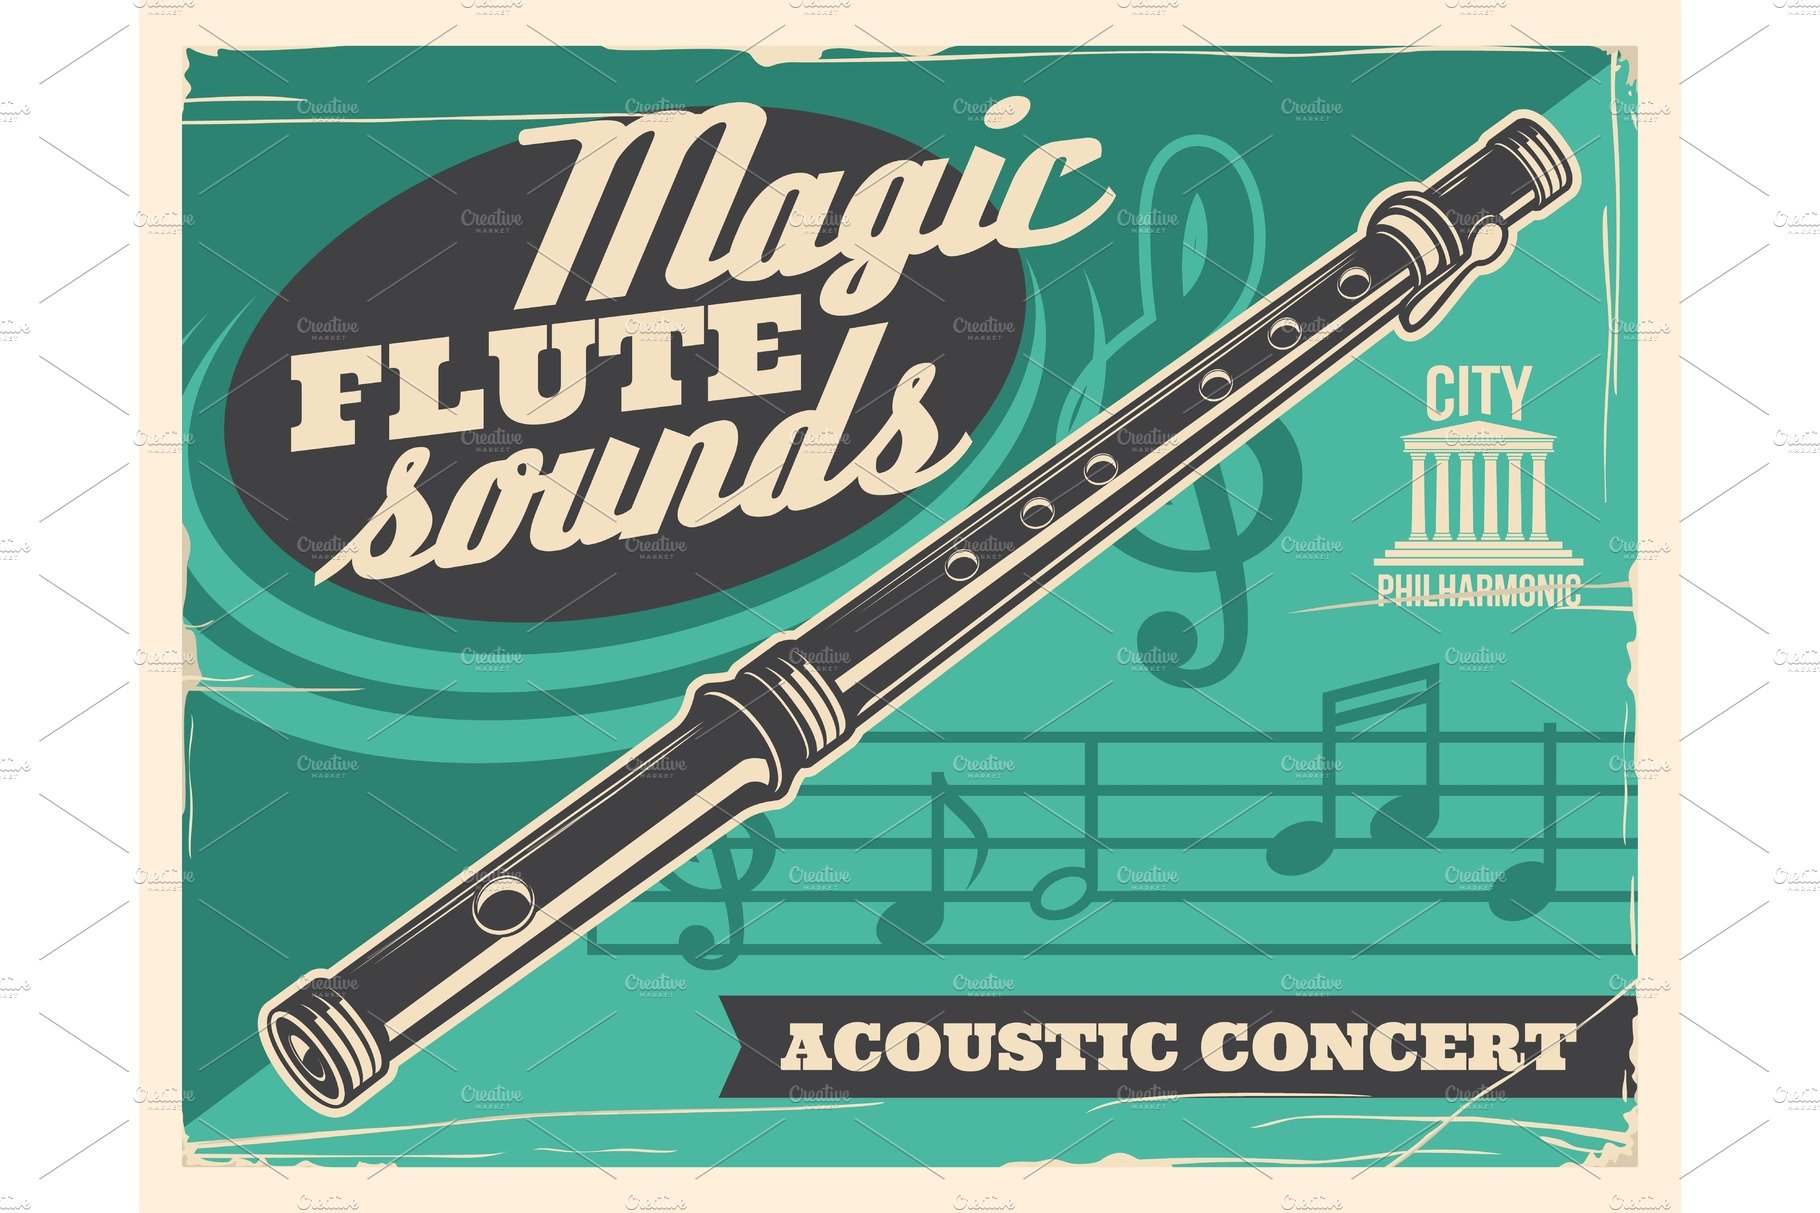 Flute music, live acoustic concert cover image.